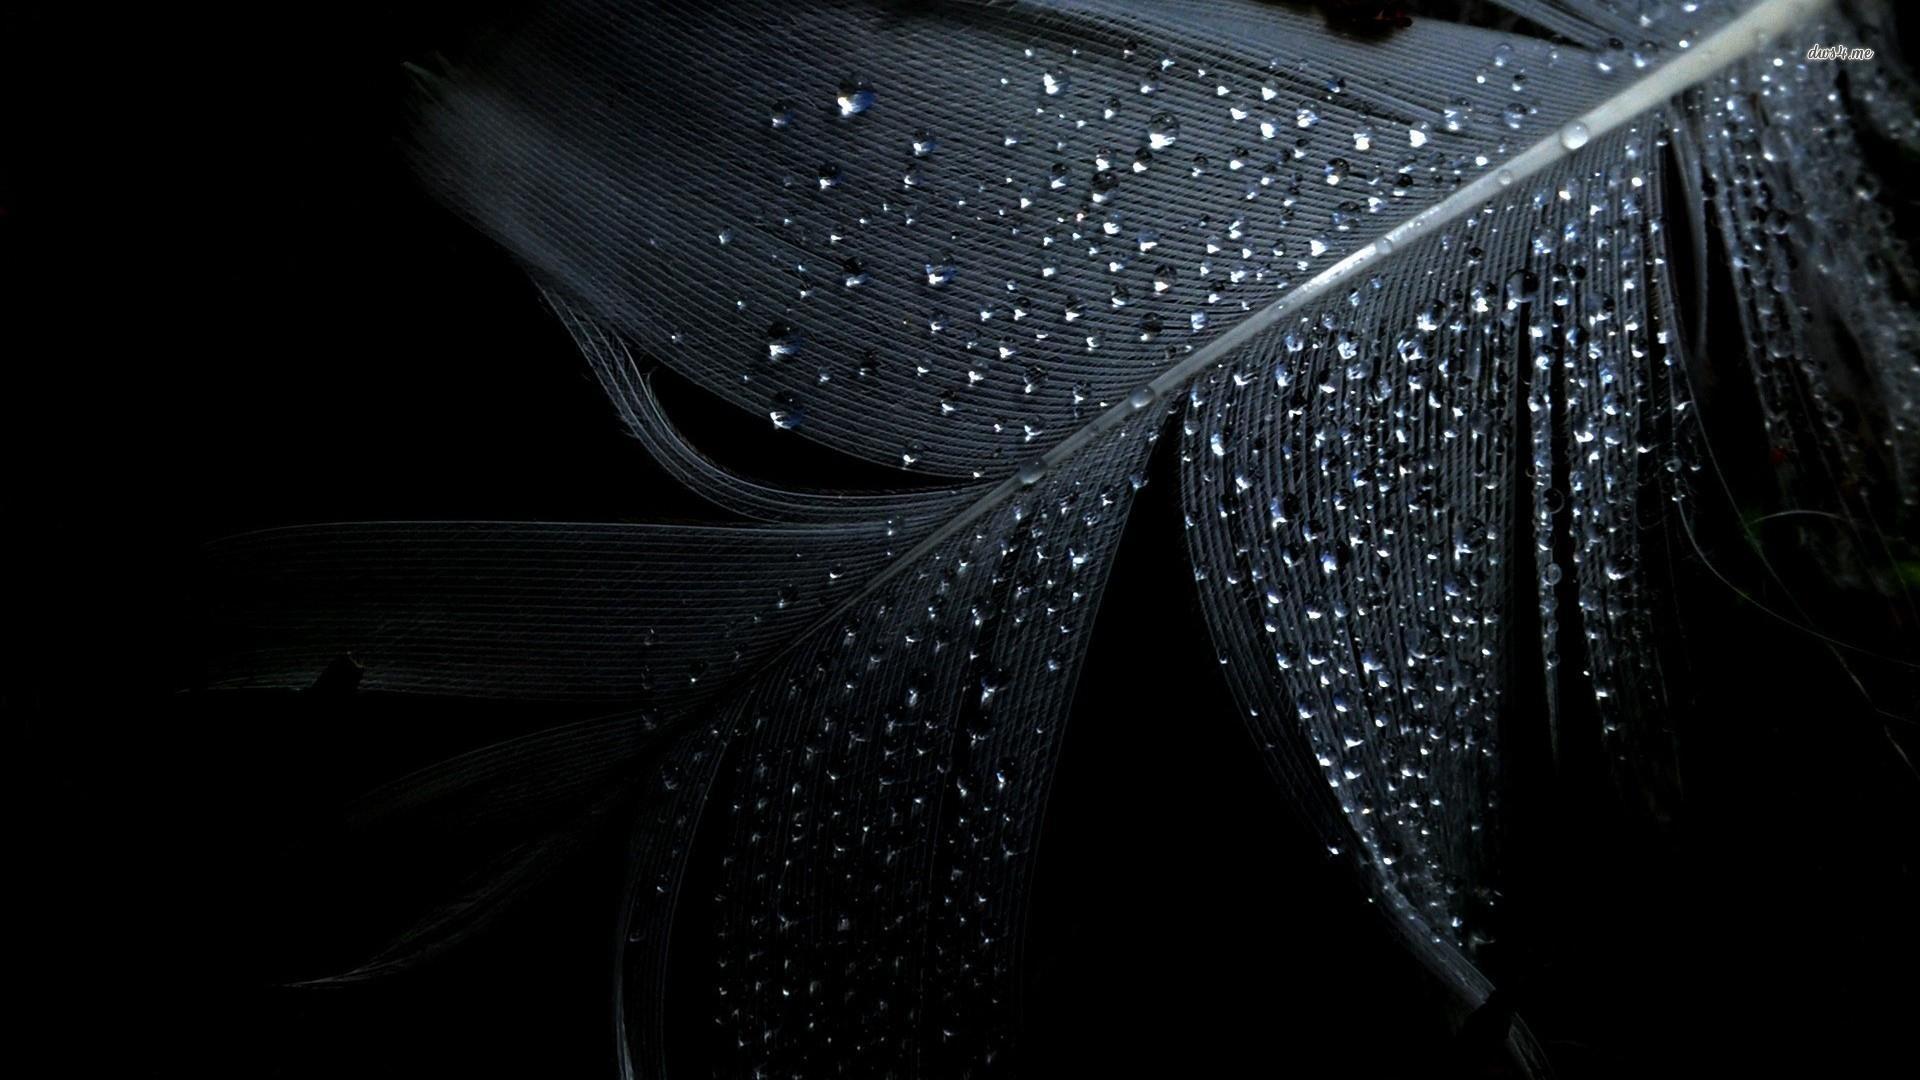 Water Drops On Black Feather Wallpaper. Wallpaper Studio 10. Tens